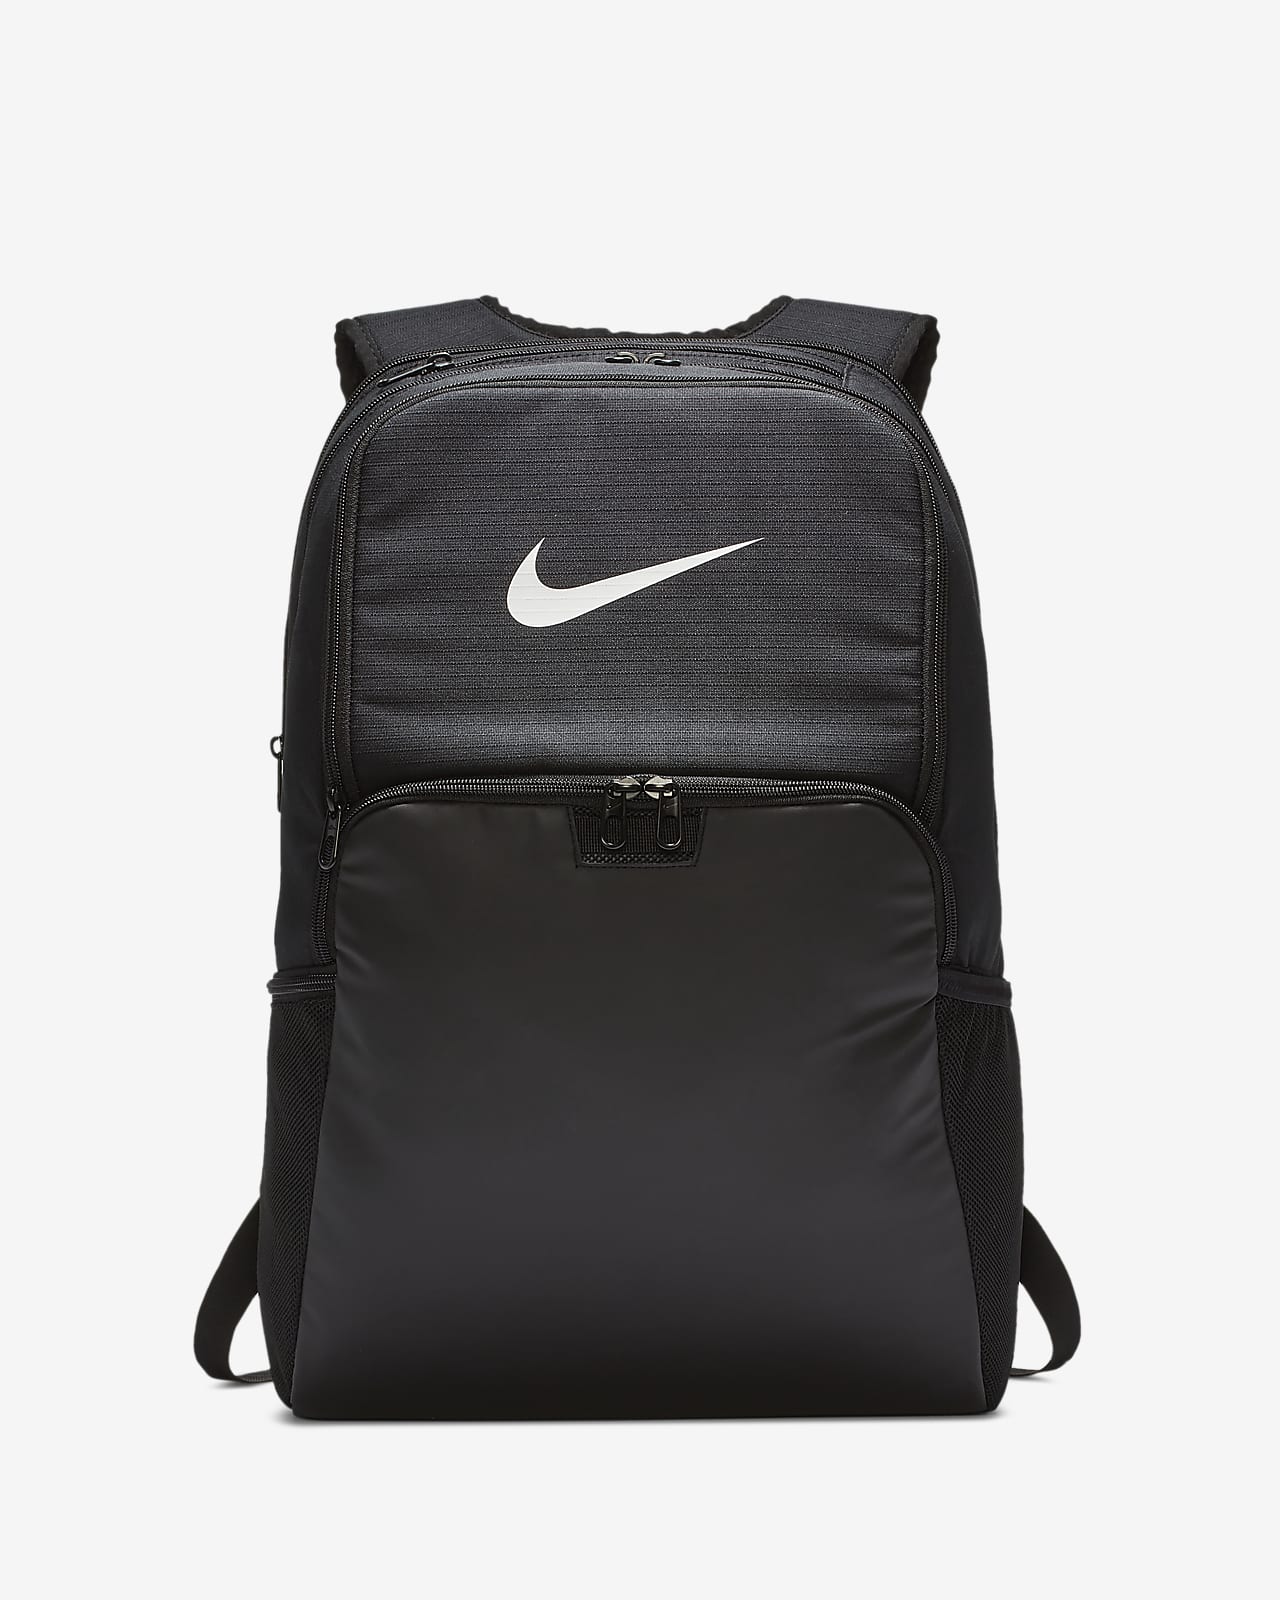 Рюкзак для тренинга Nike Brasilia 